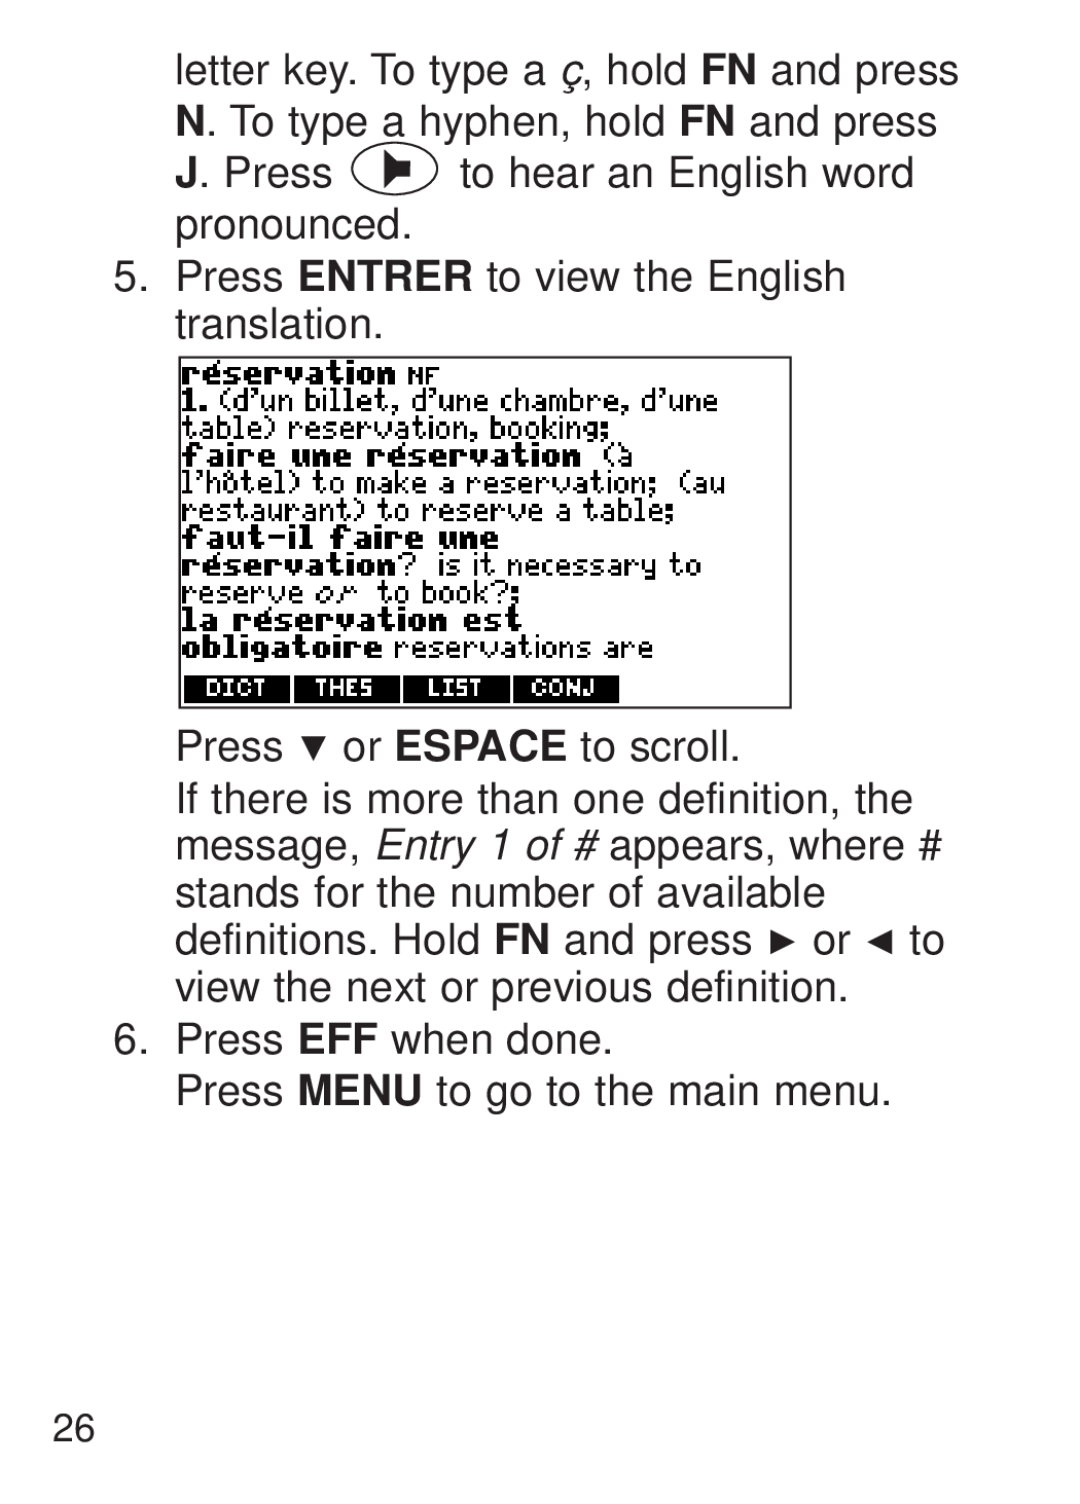 Franklin FQS-1870 manual J. Press to hear an English word pronounced 